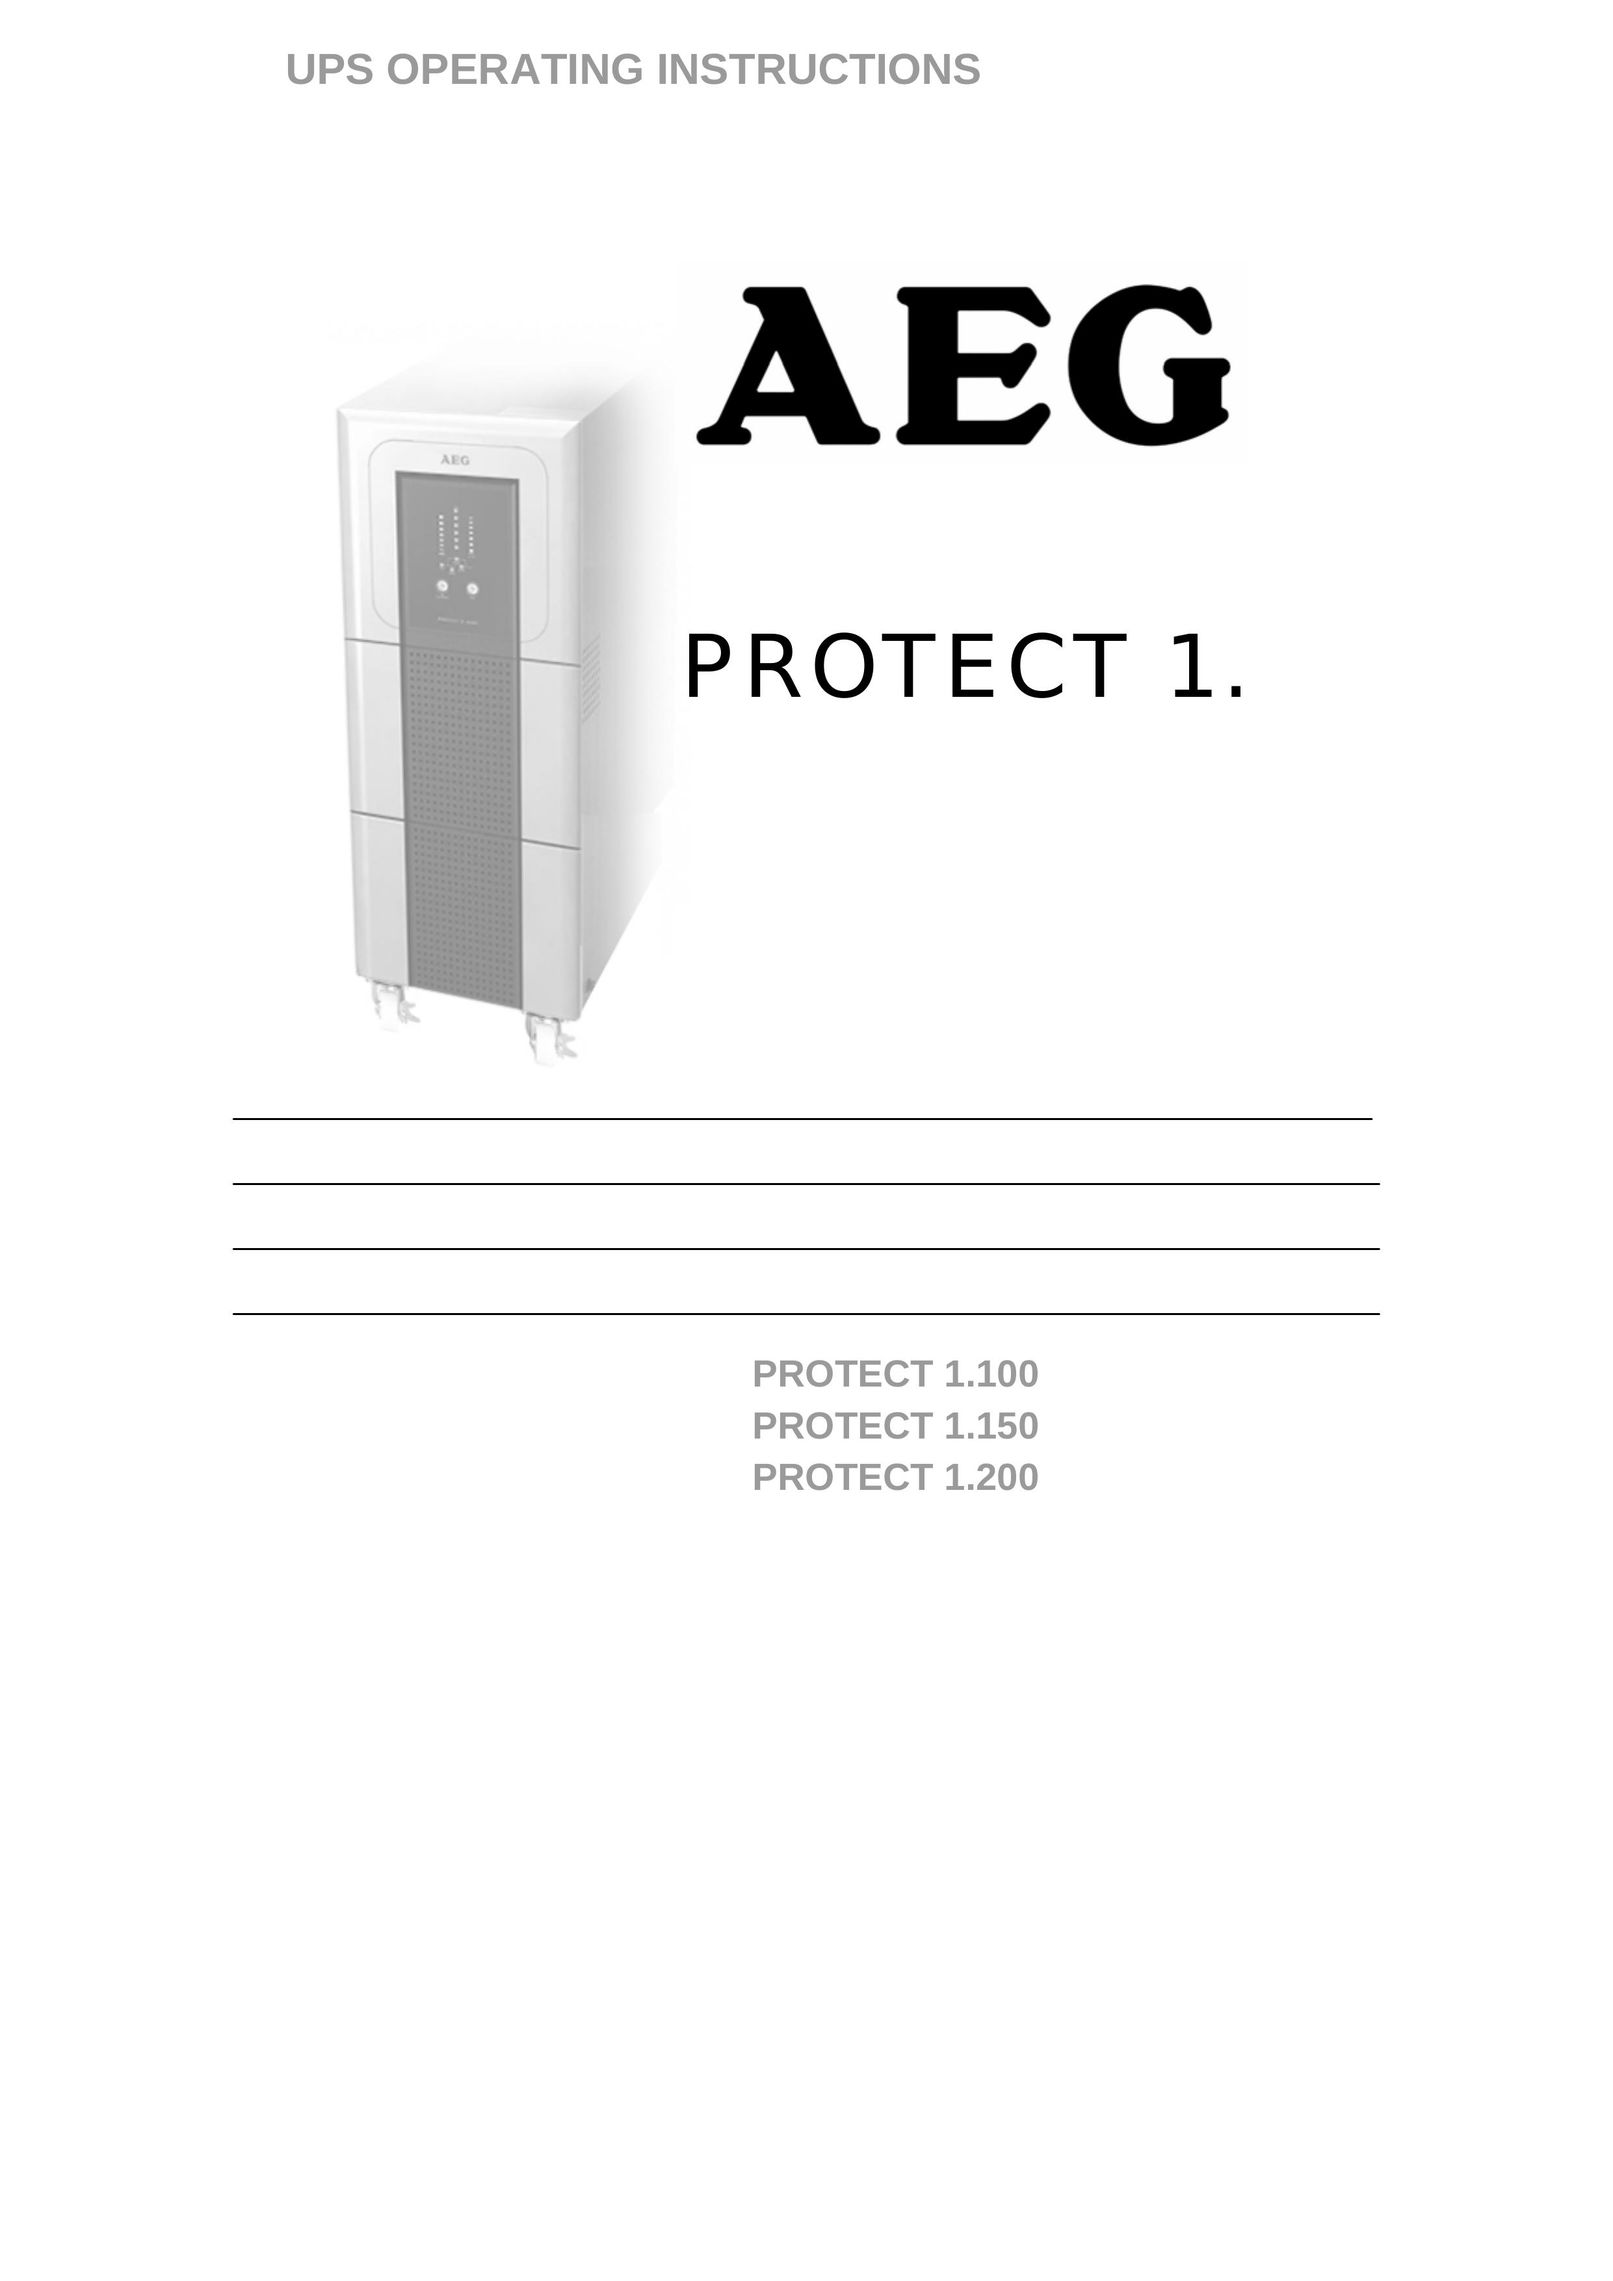 AEG PROTECT 1.200 Power Supply User Manual